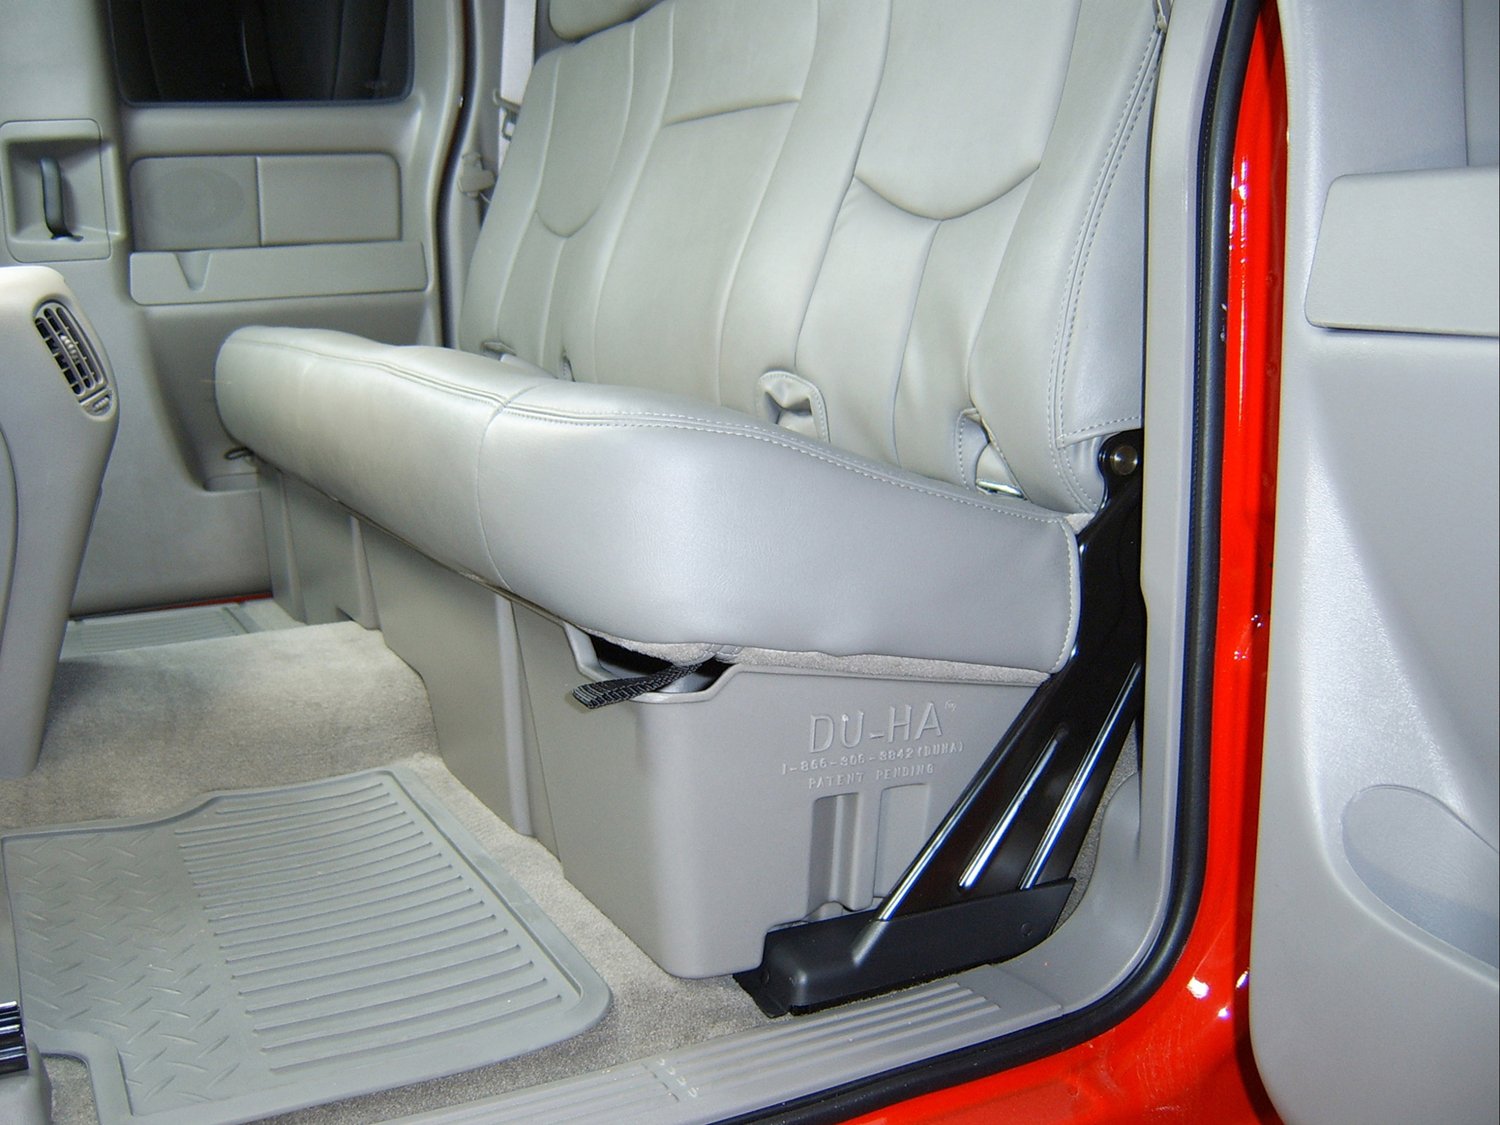 DU-HA Under Seat Storage Fits 99-07 Chevrolet/GMC Silverado/Sierra Extended Cab, Lt Gray, Part #10002